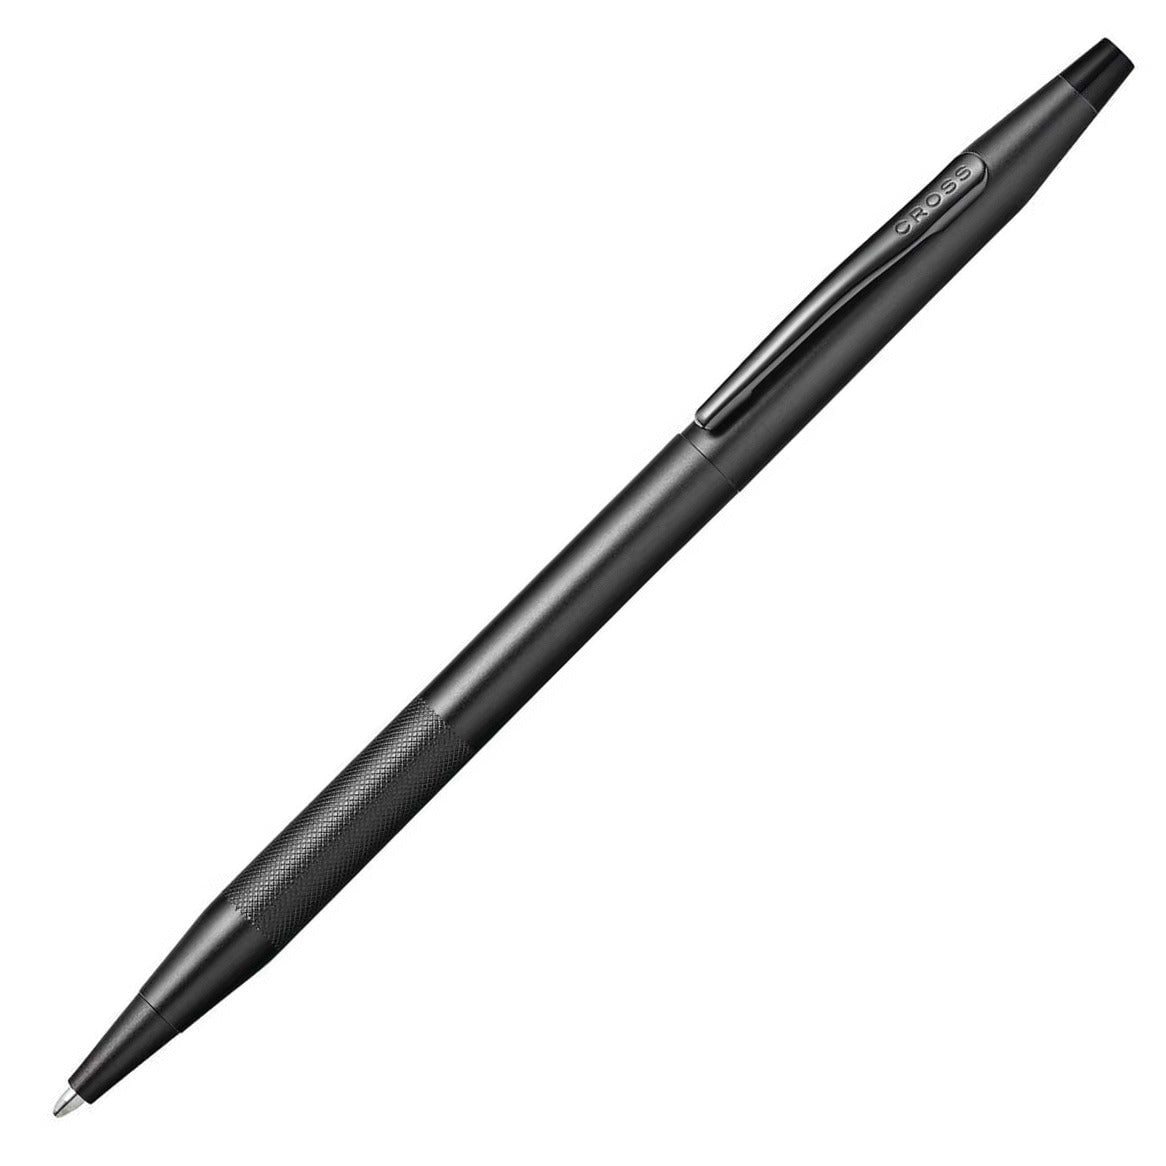 Polished Chrome & Black Cross Tech 2 Ballpoint Pen & Stylus Plus 1 Free Refill 